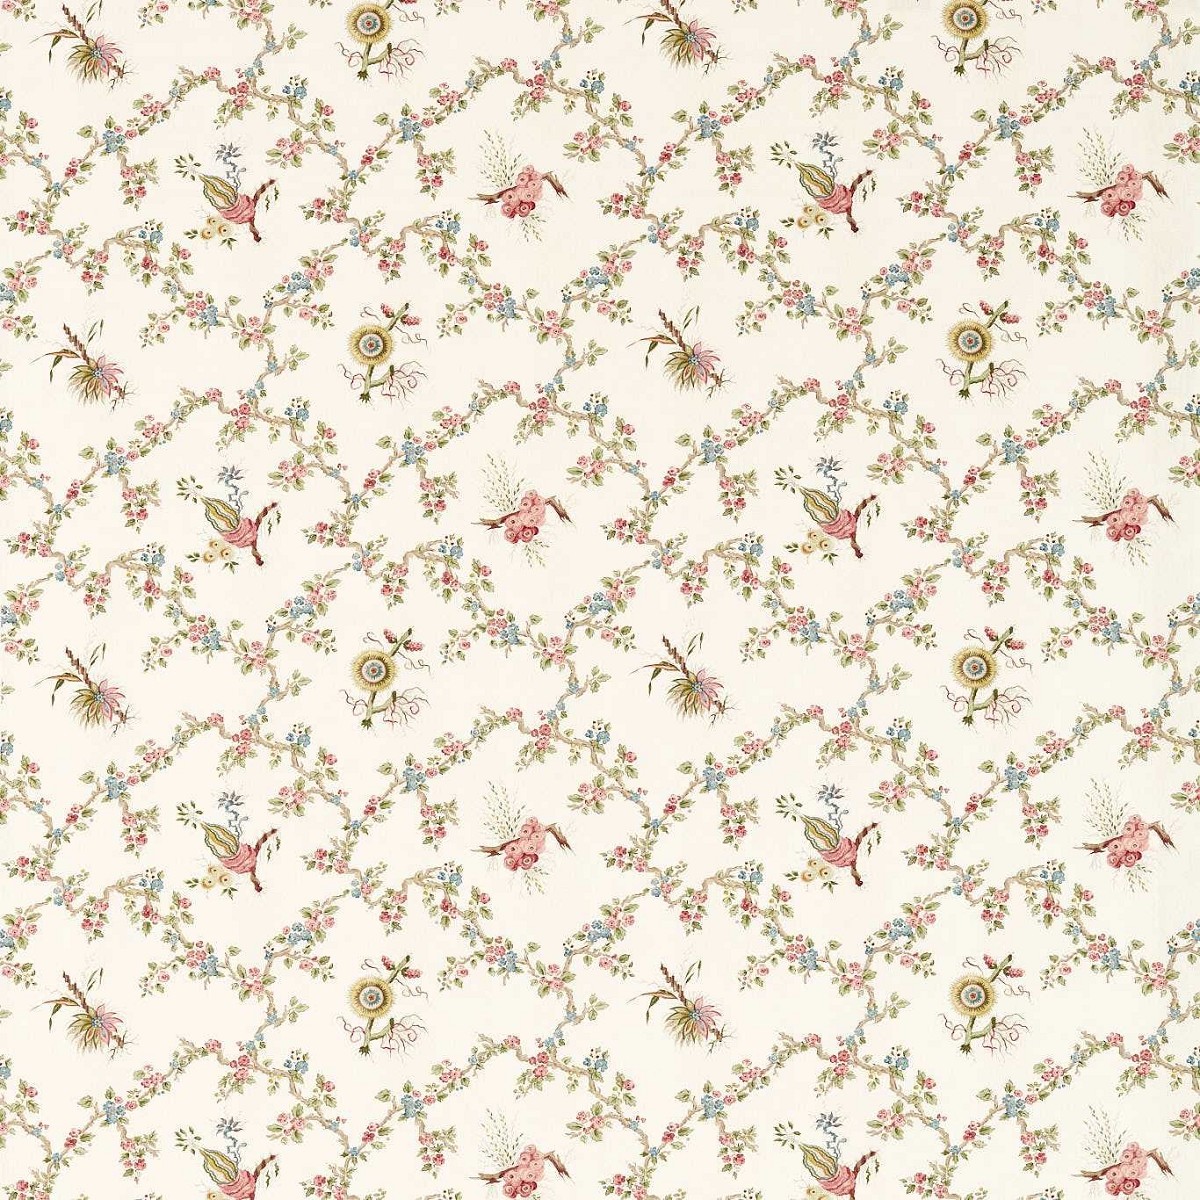 Trelliage Raspberry/Stone Fabric by Sanderson